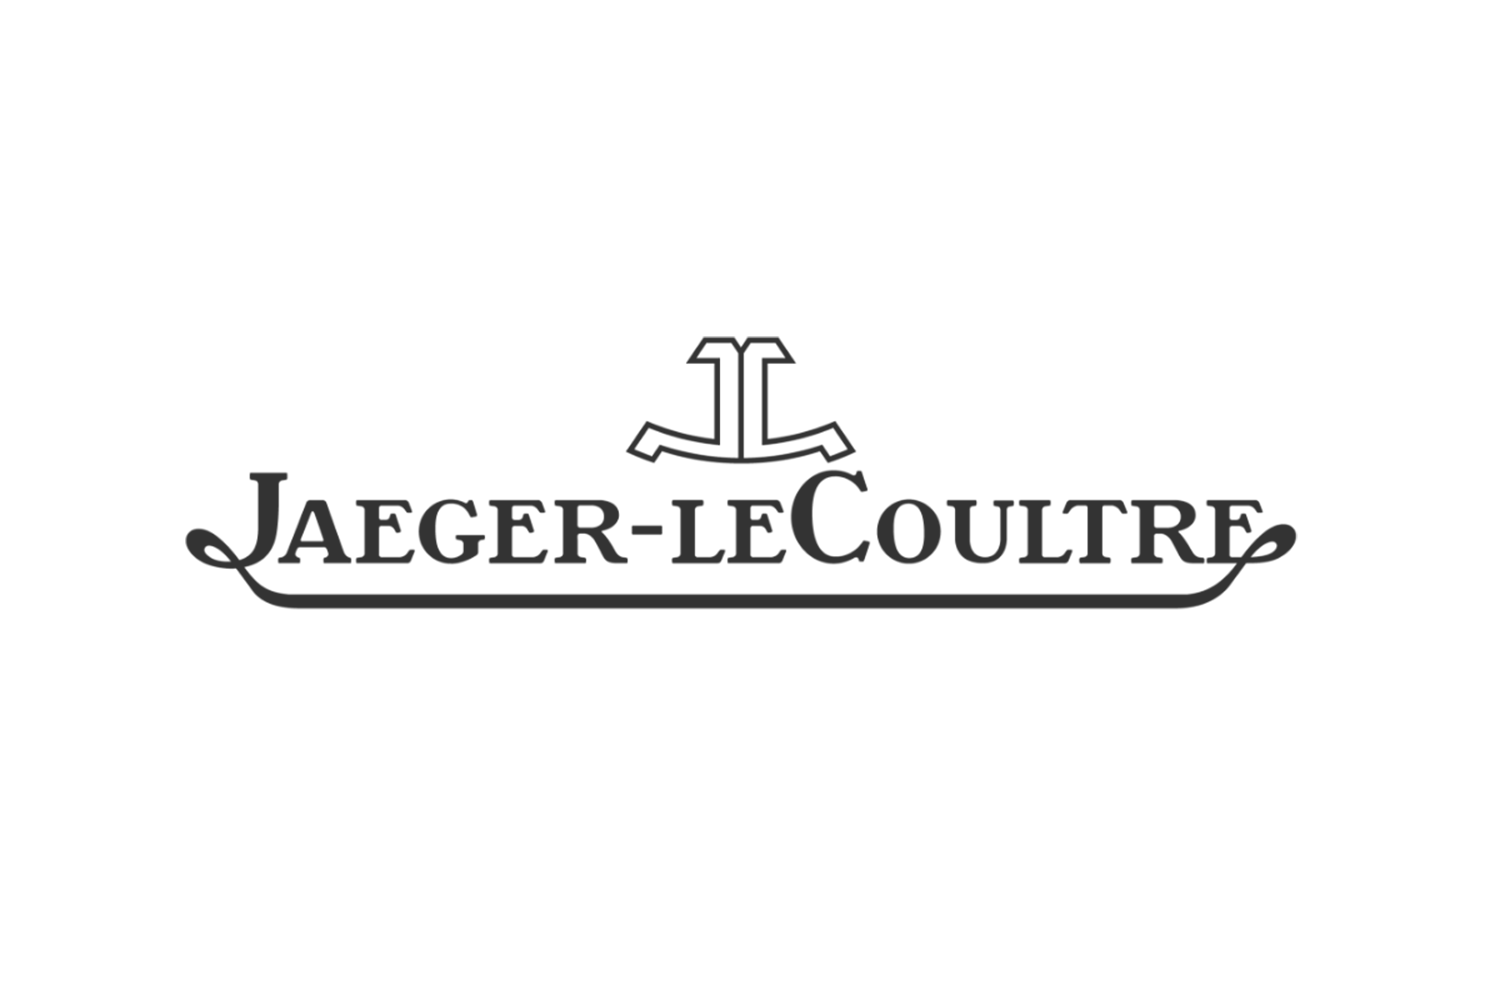 JLC-Logo